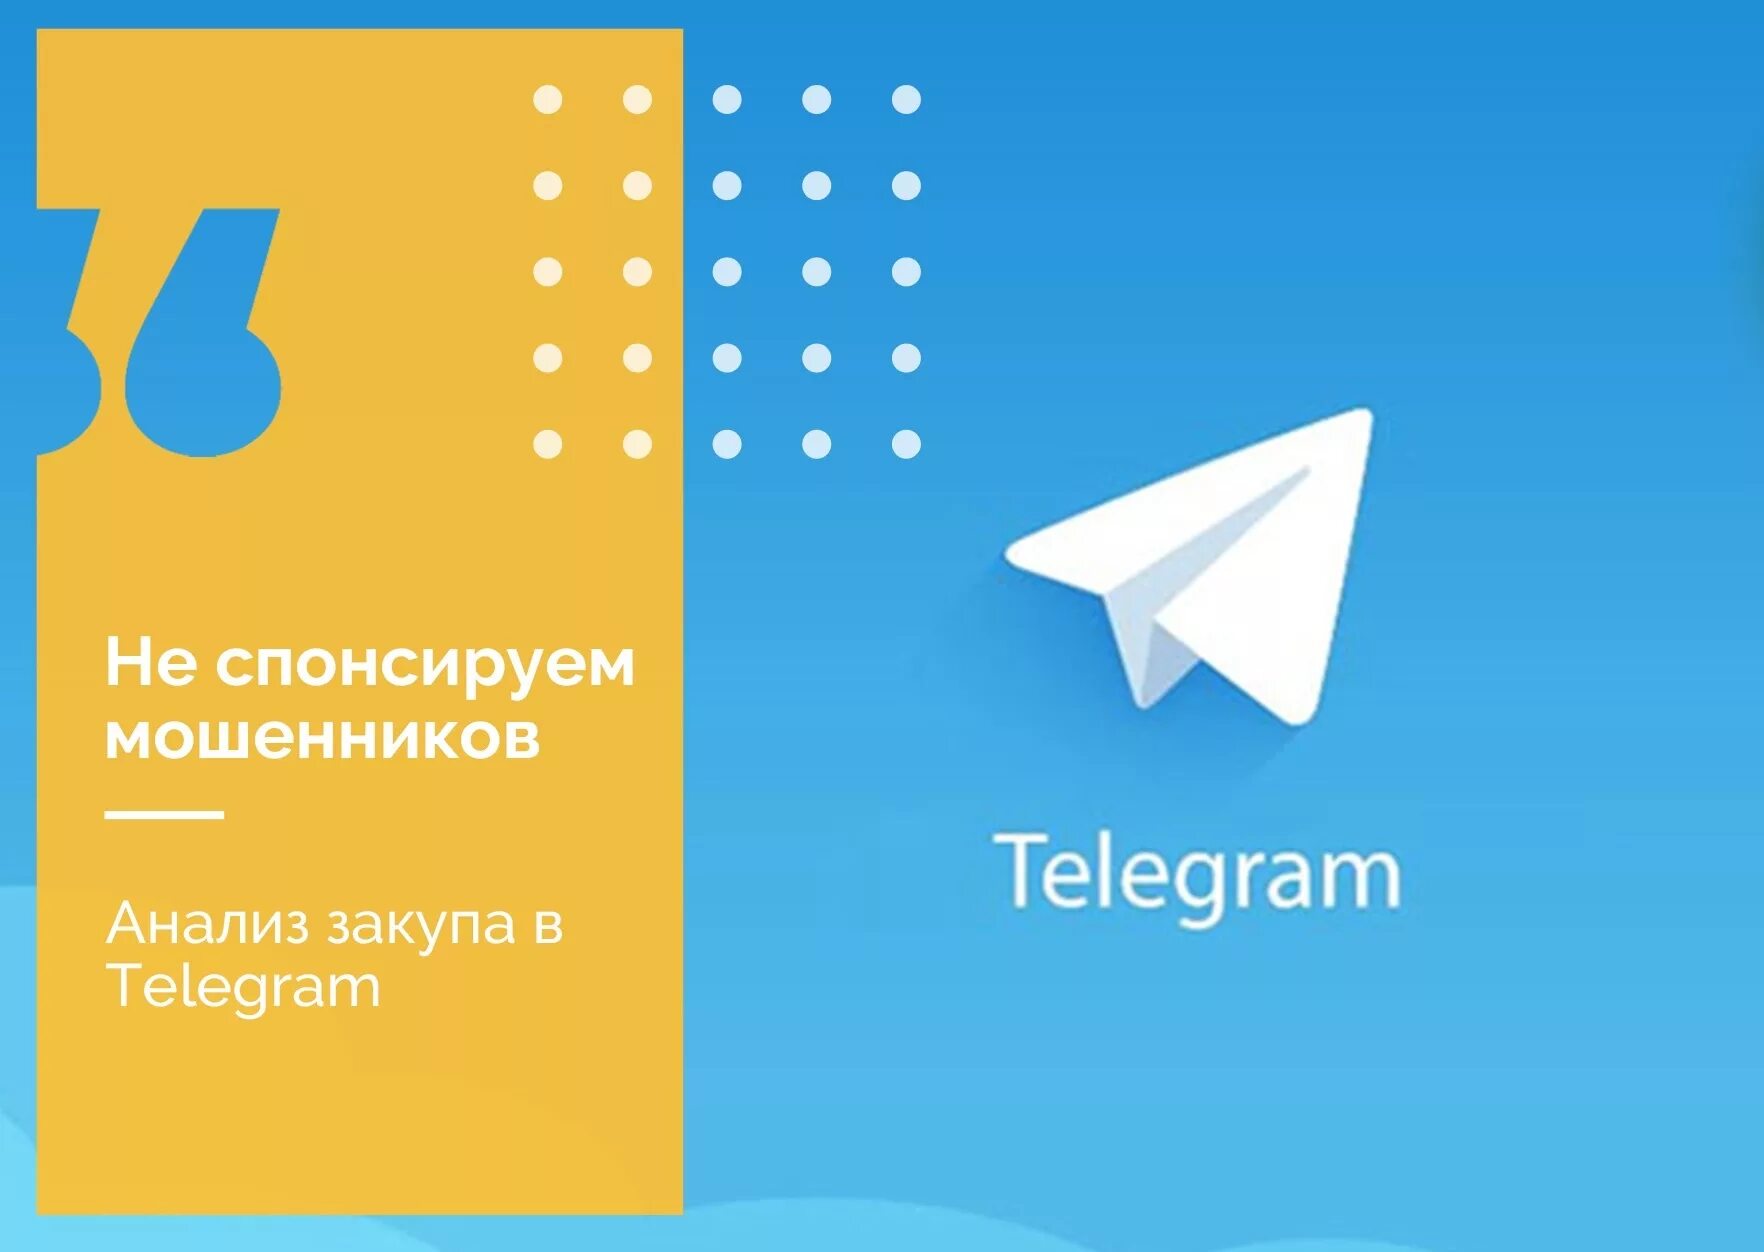 Telegram channel s. Реклама телеграм канала. Рекламный канал в телеграмме. Реклама канала в телегрпам. Рекламный баннер телеграмма.